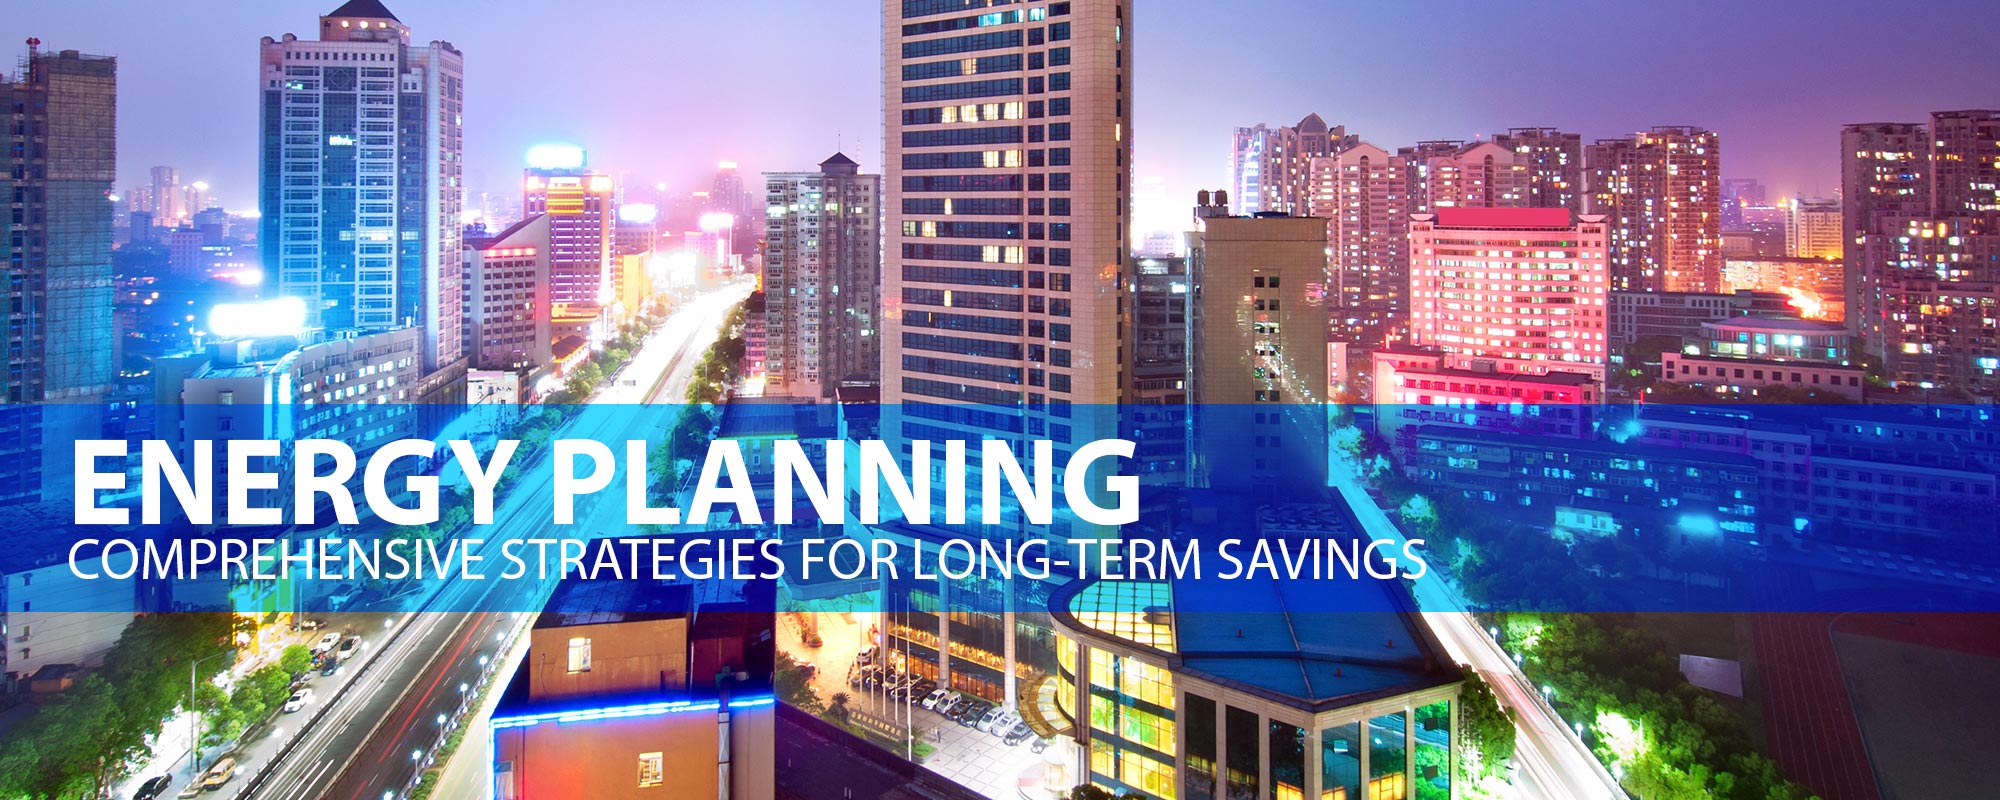 Energy Planning - Comprehensive strategies for long-term savings